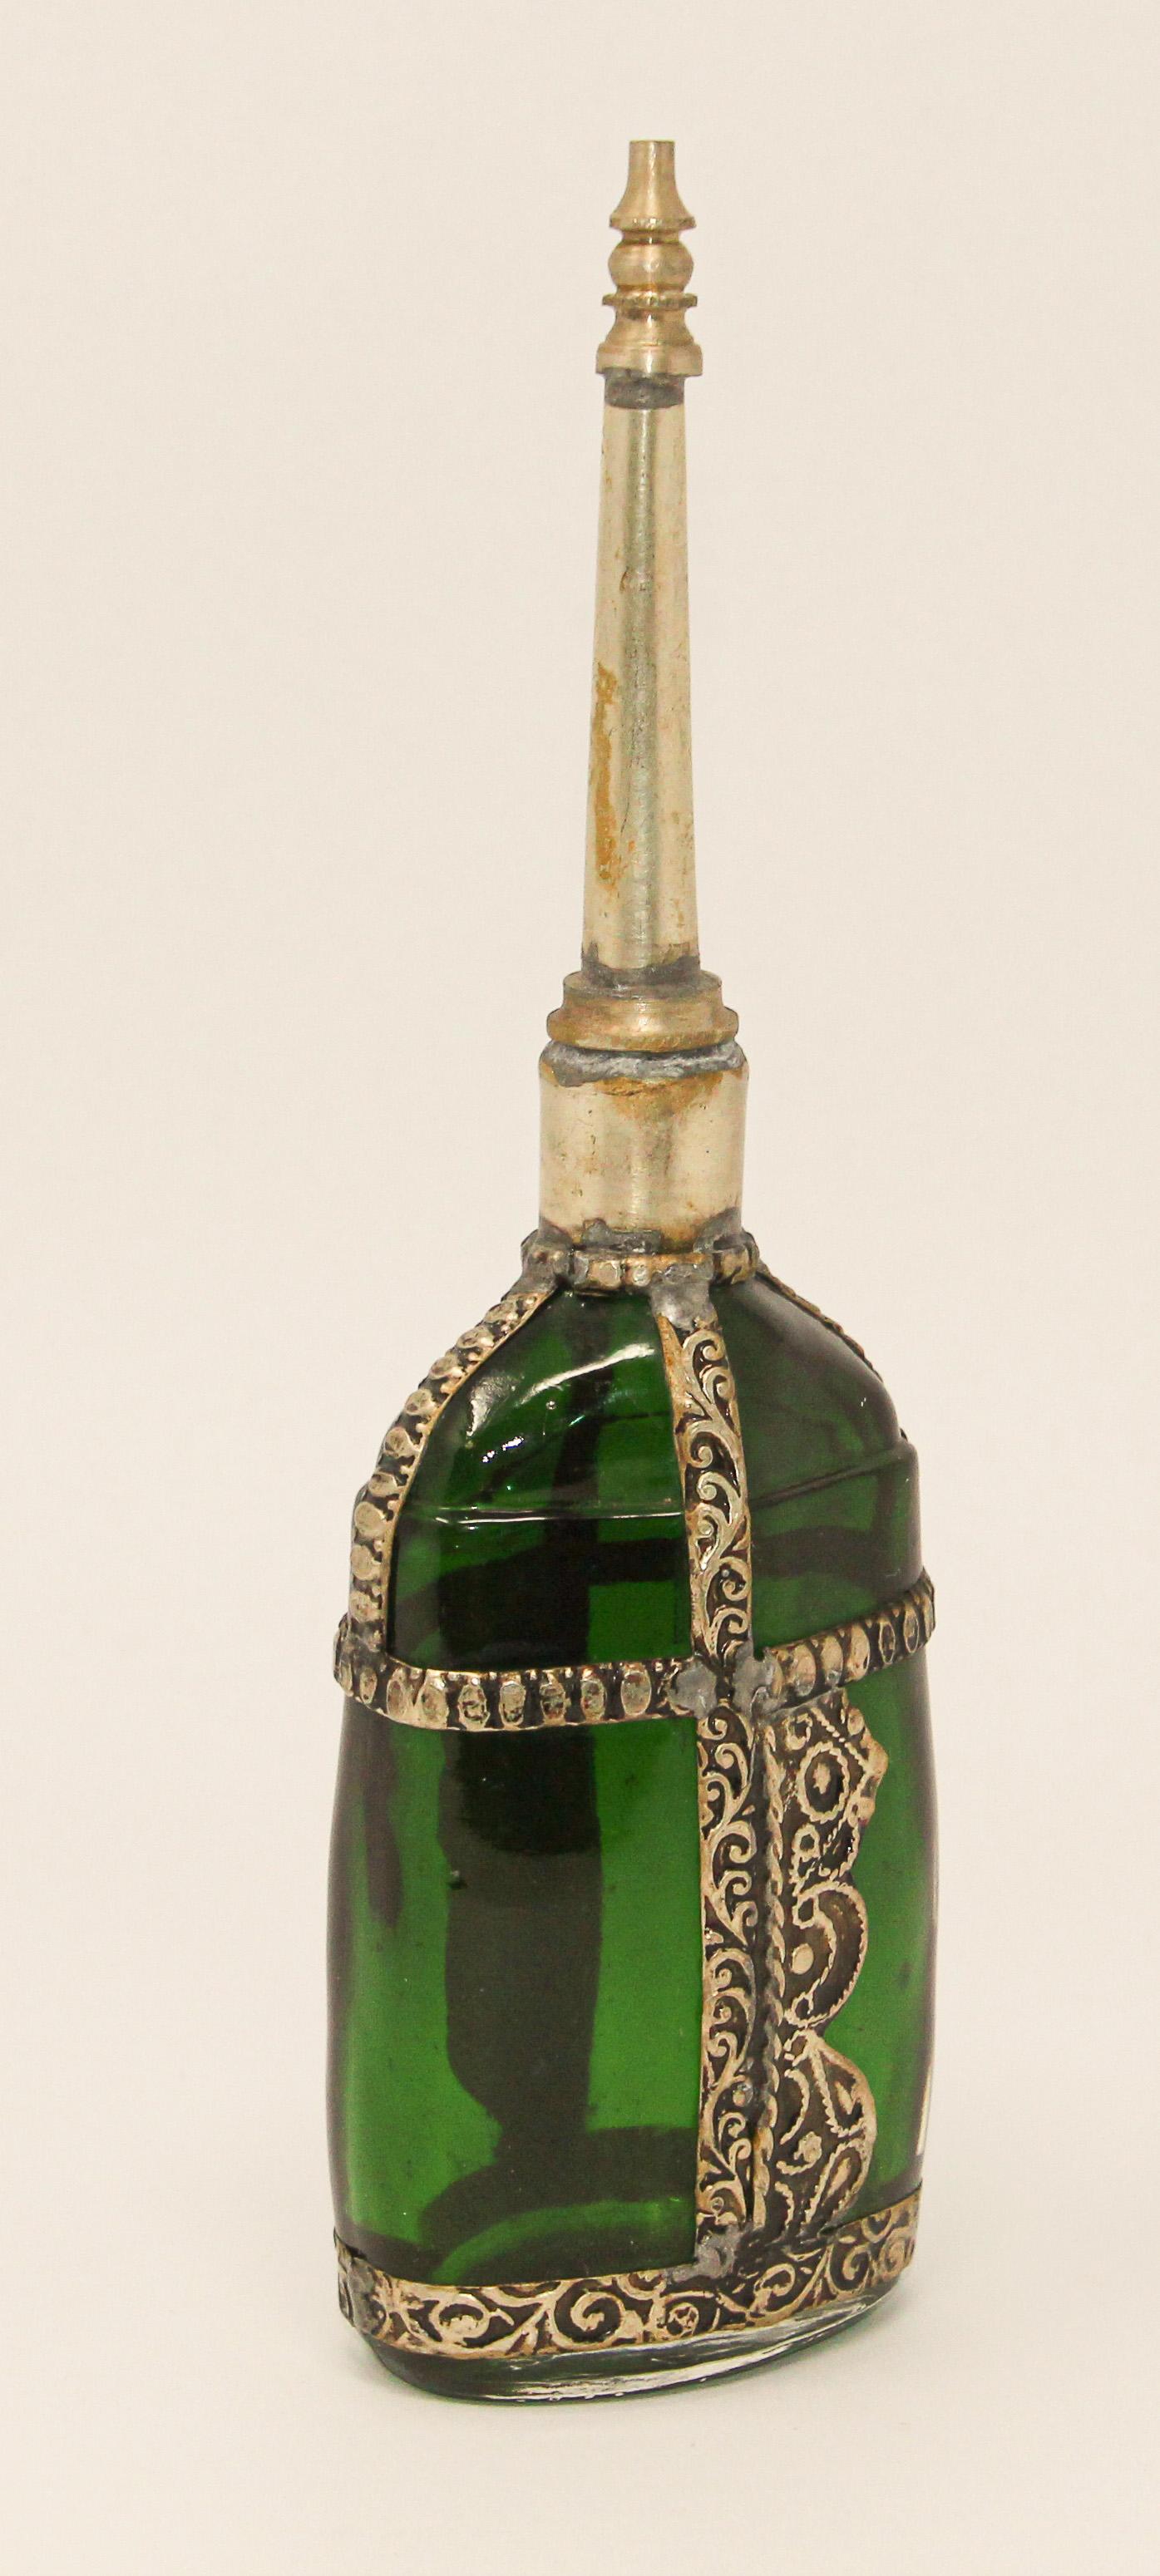 Hand-Crafted Moorish Green Glass Perfume Bottle Sprinkler with Embossed Metal Overlay